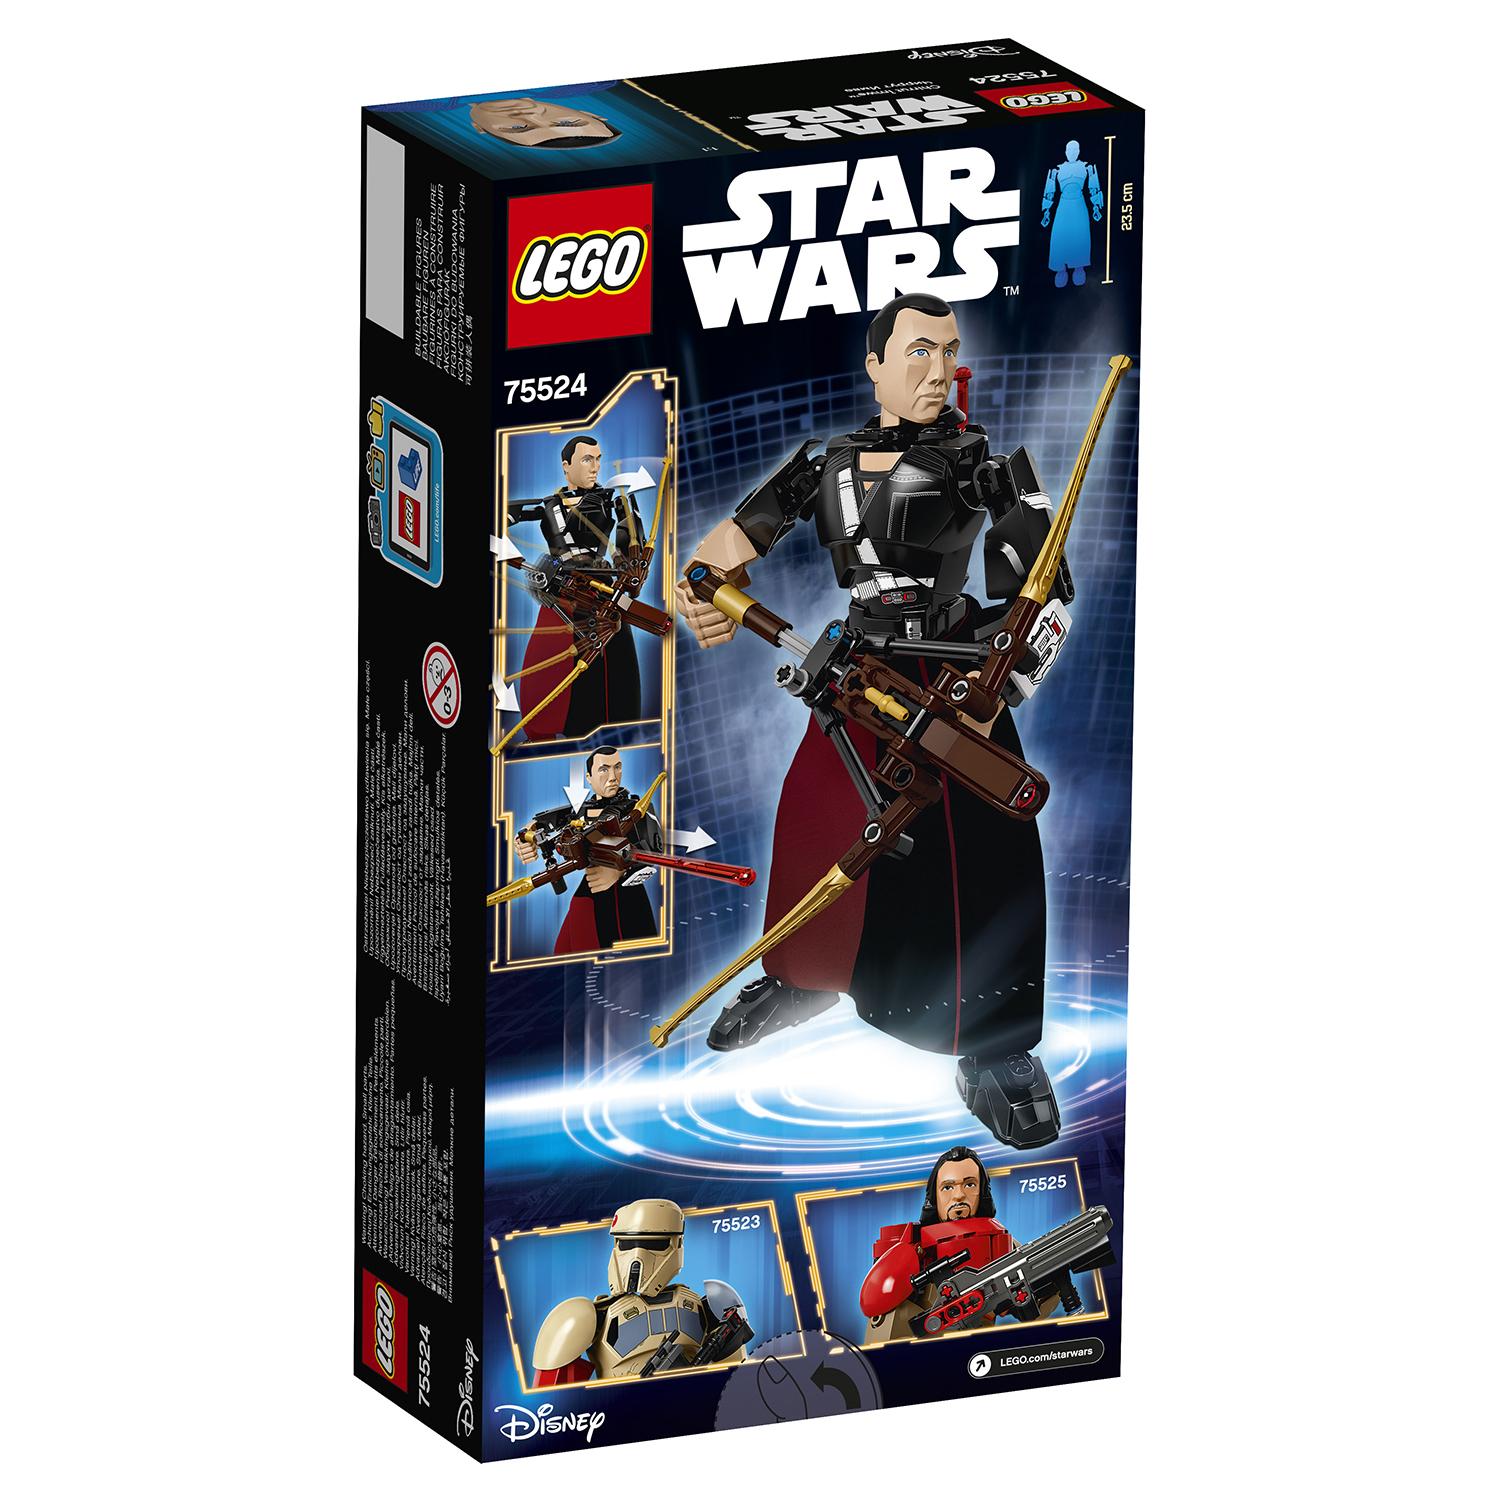 Lego Star Wars 75524 Чиррут Имве